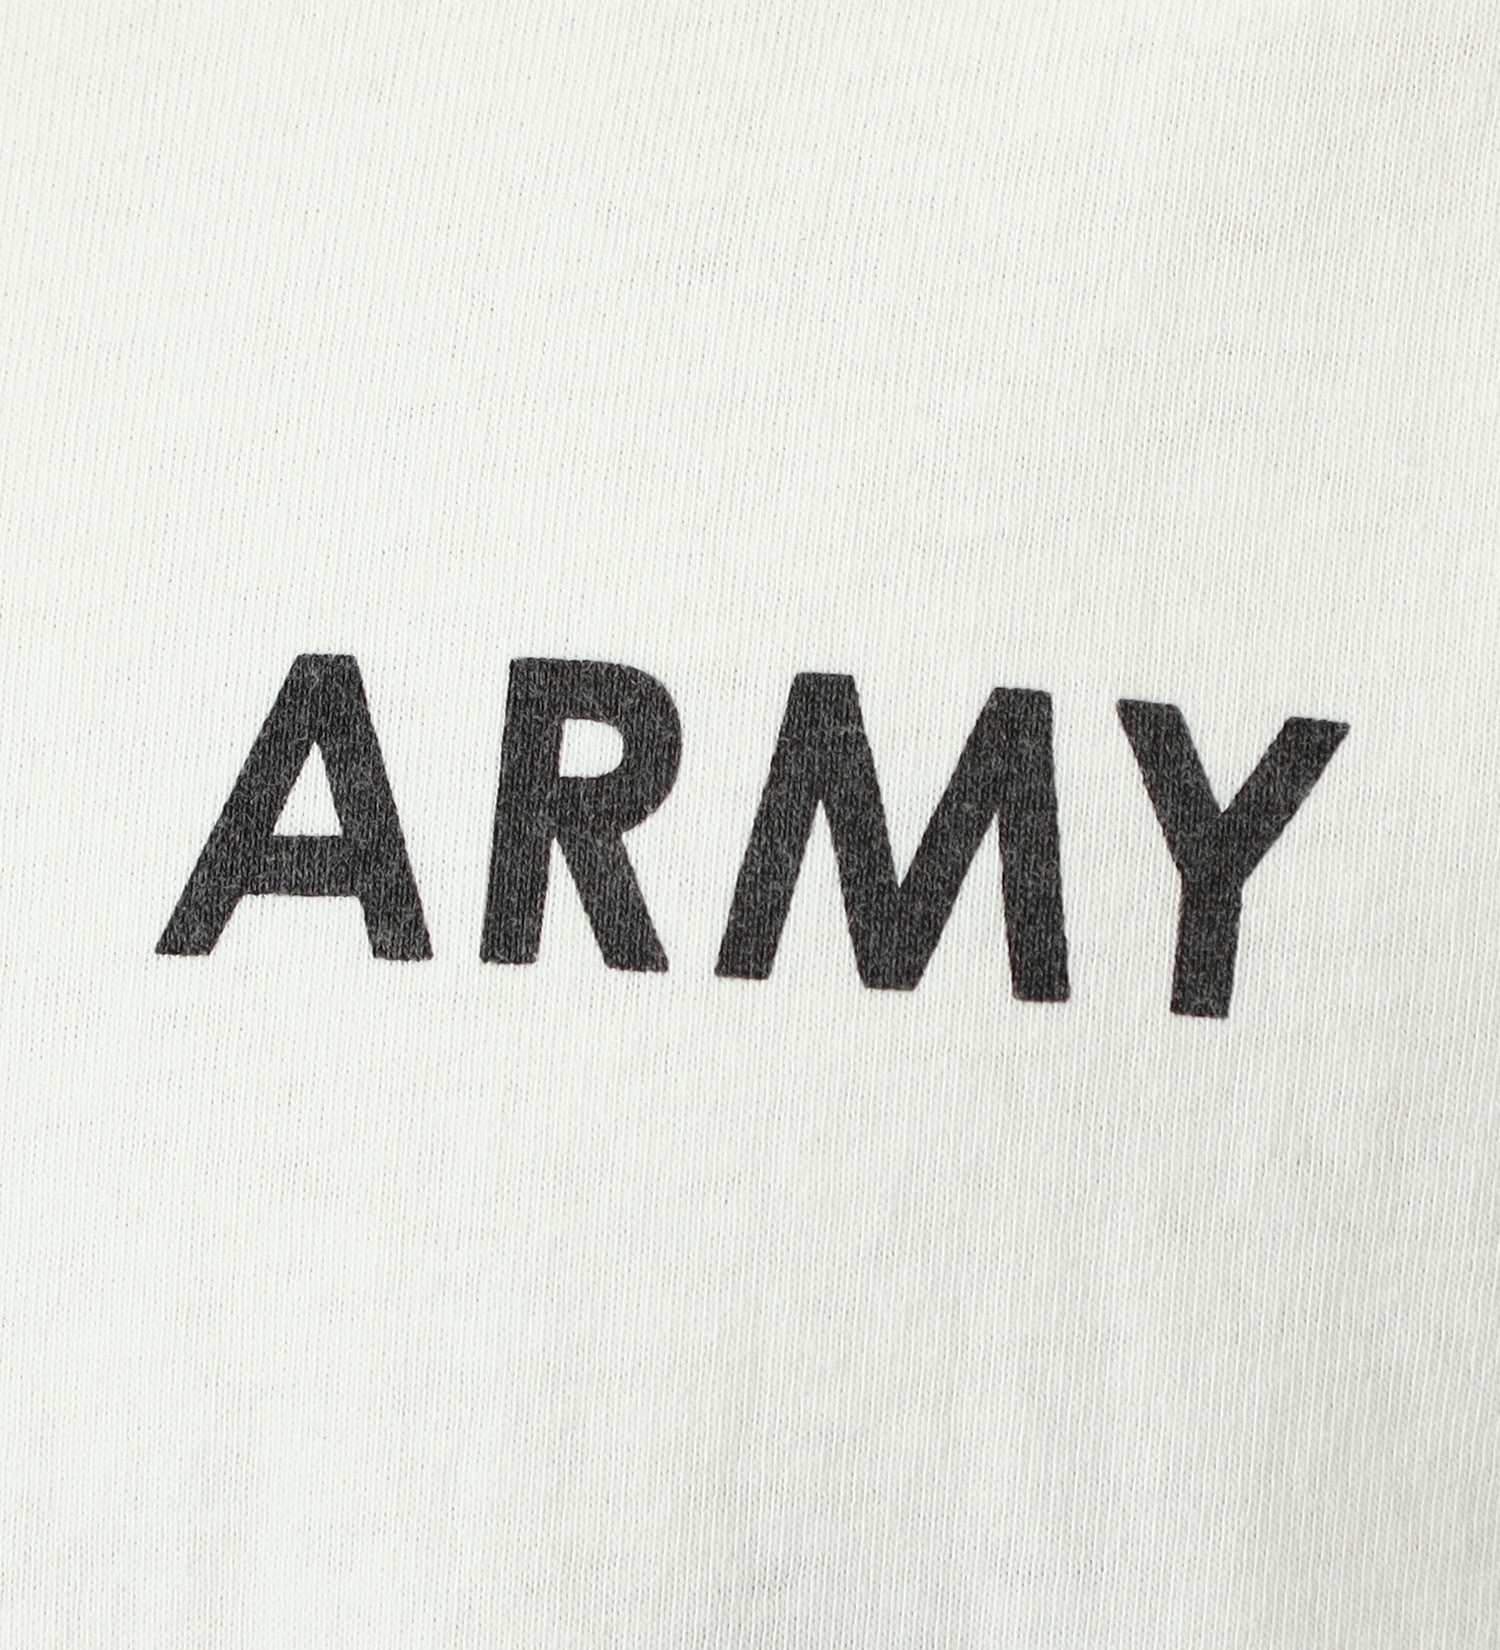 ALPHA(アルファ)の【GW SALE】ARMYワンポイントプリント長袖Tシャツ|トップス/Tシャツ/カットソー/メンズ|ホワイト